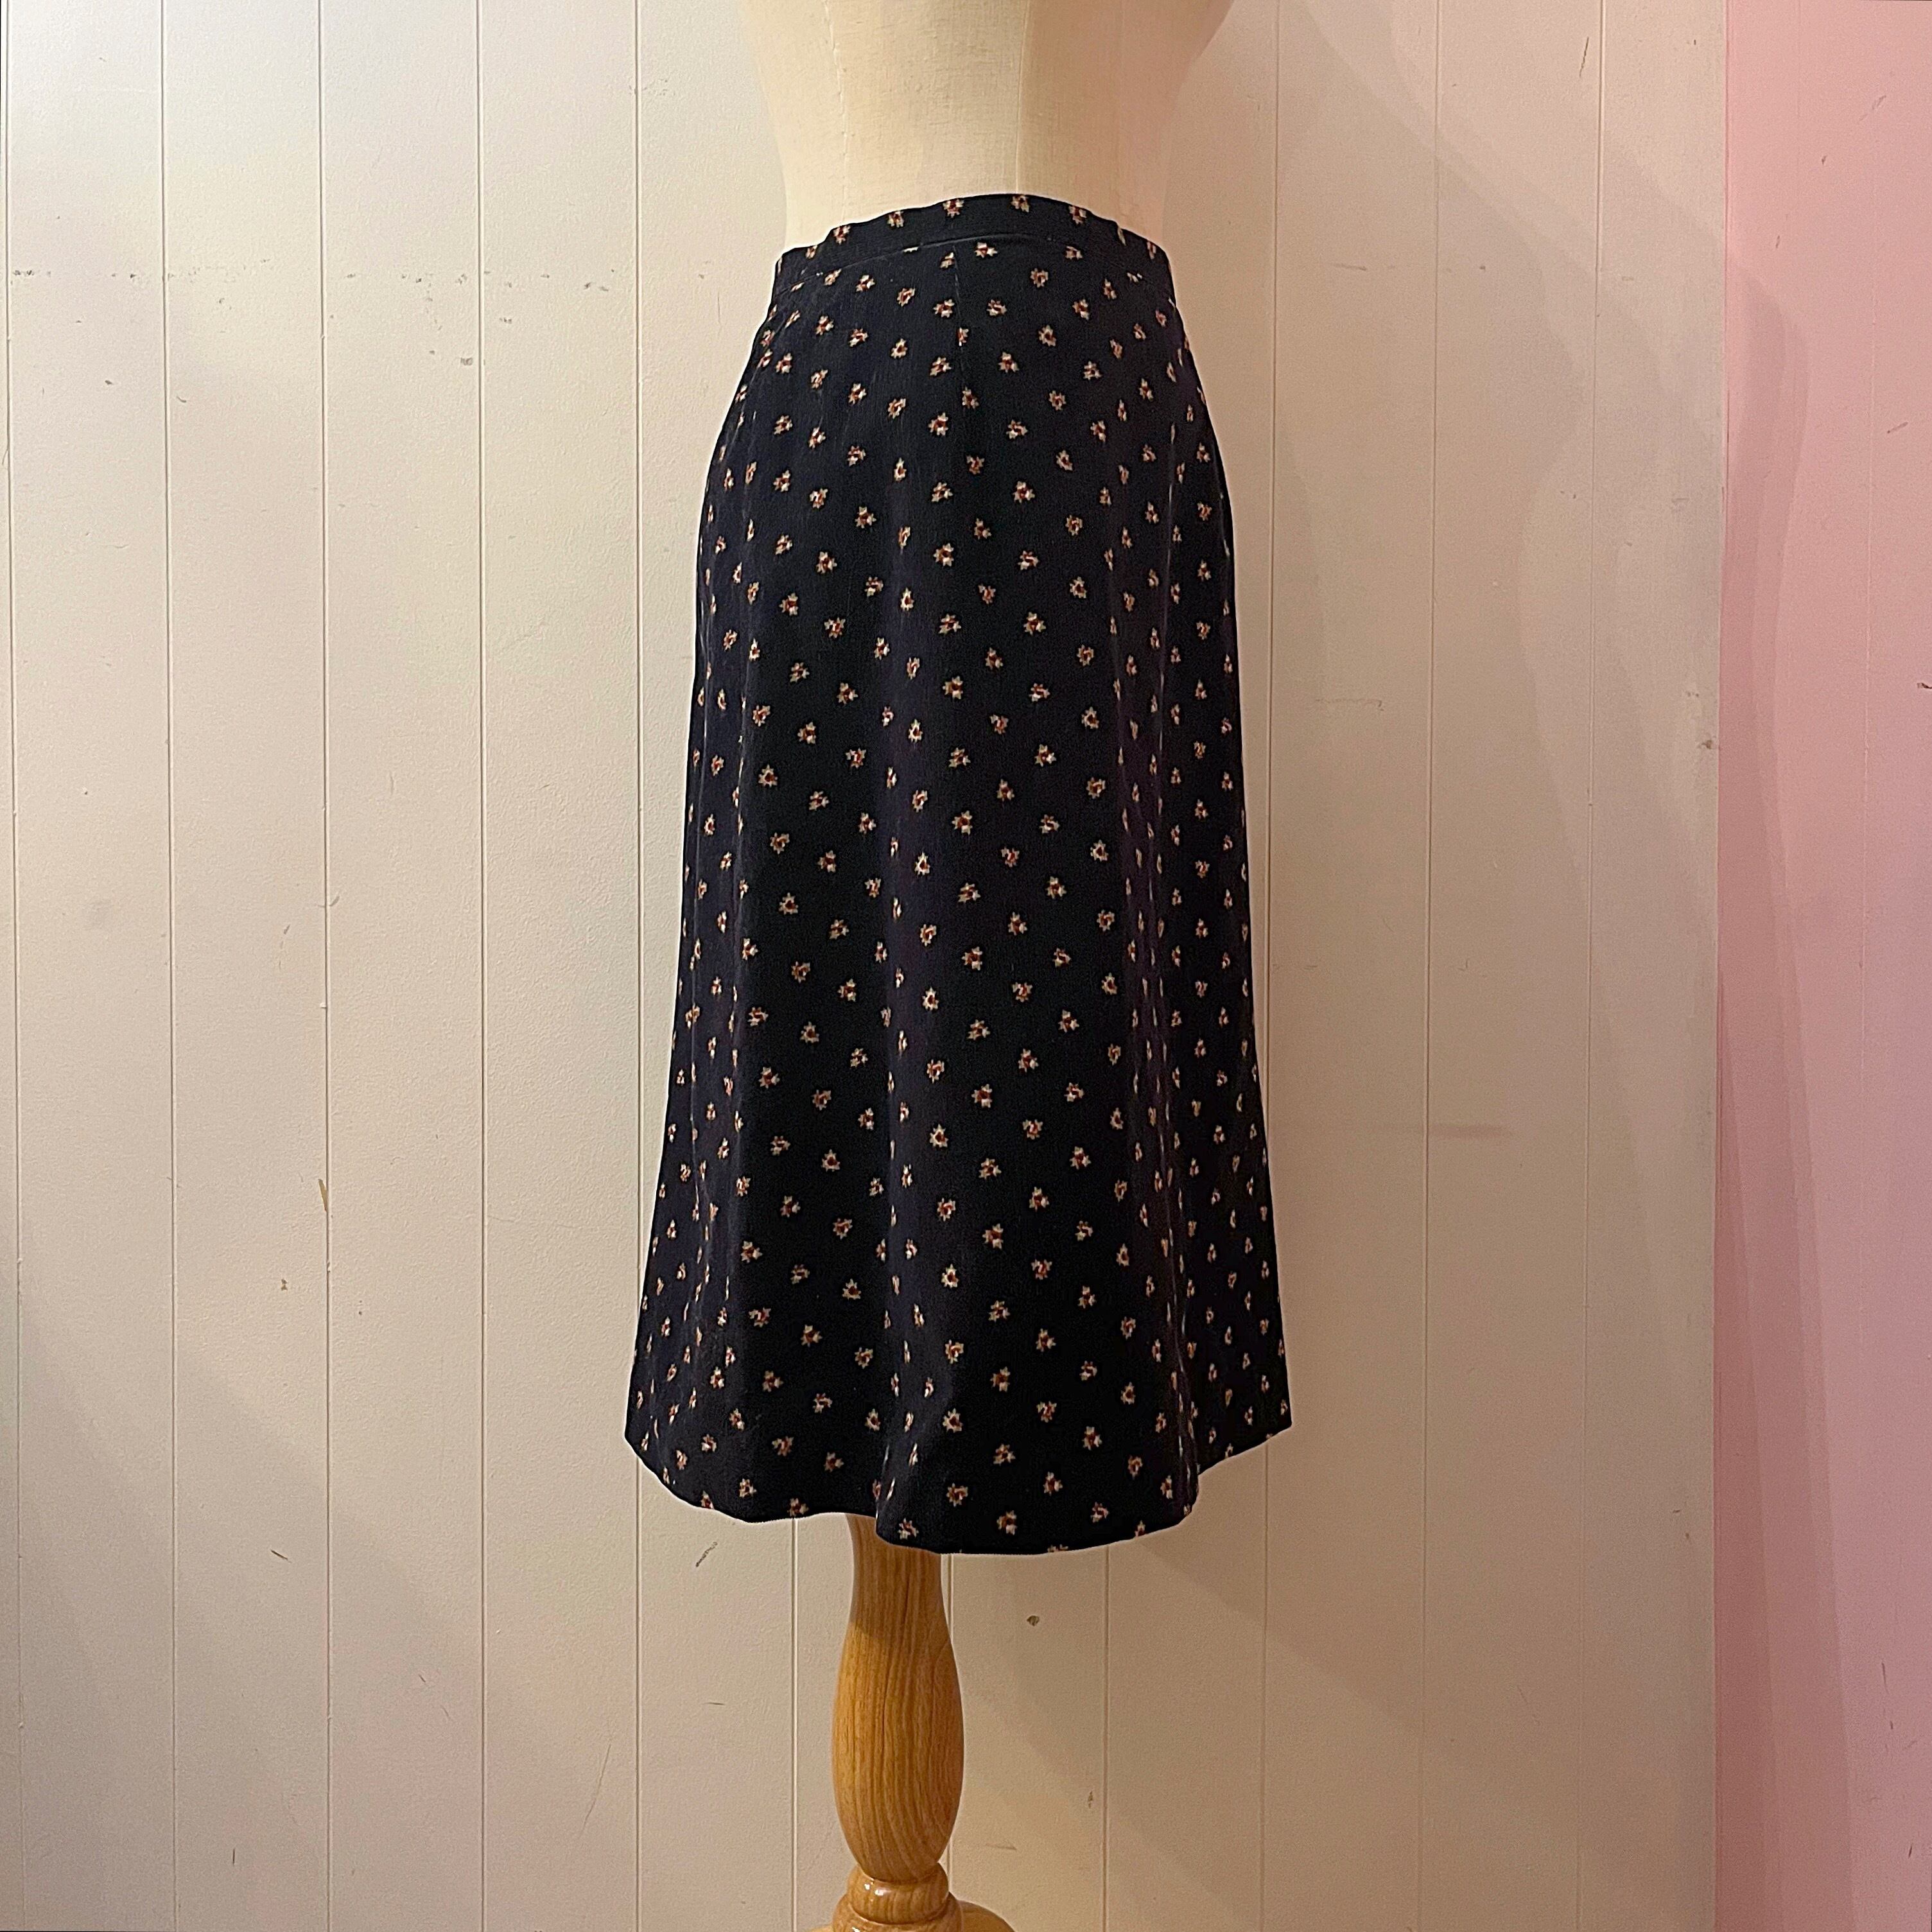 laura ashley / flower corduroy skirt